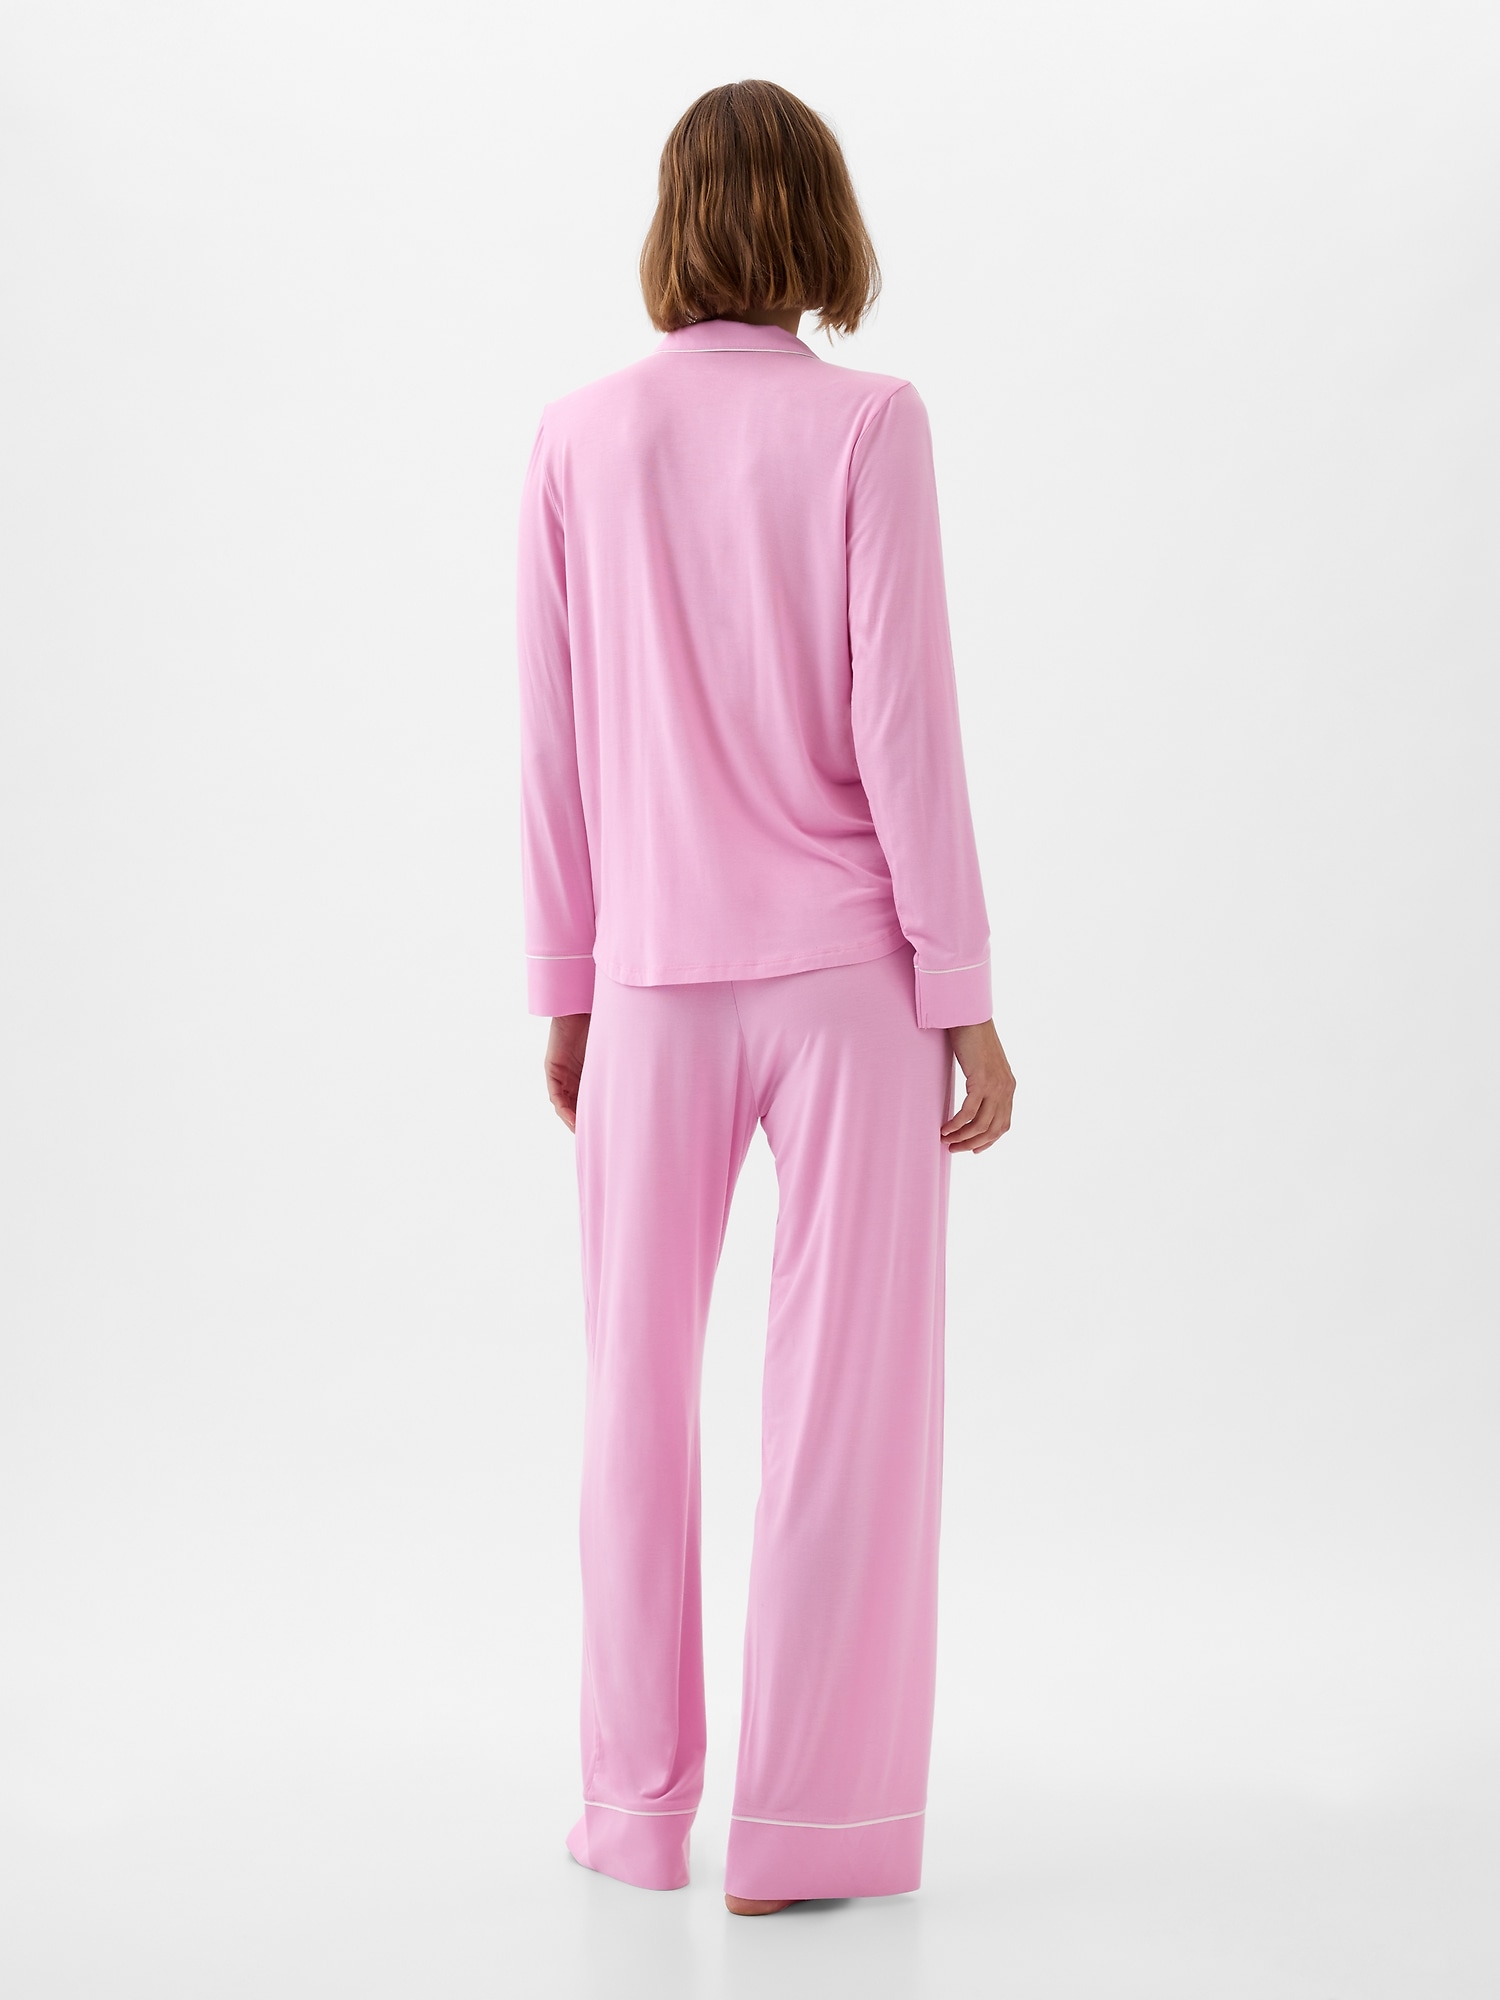 SKIMS Ribbed Boy Short Pajamas Pink Size XL - $30 (40% Off